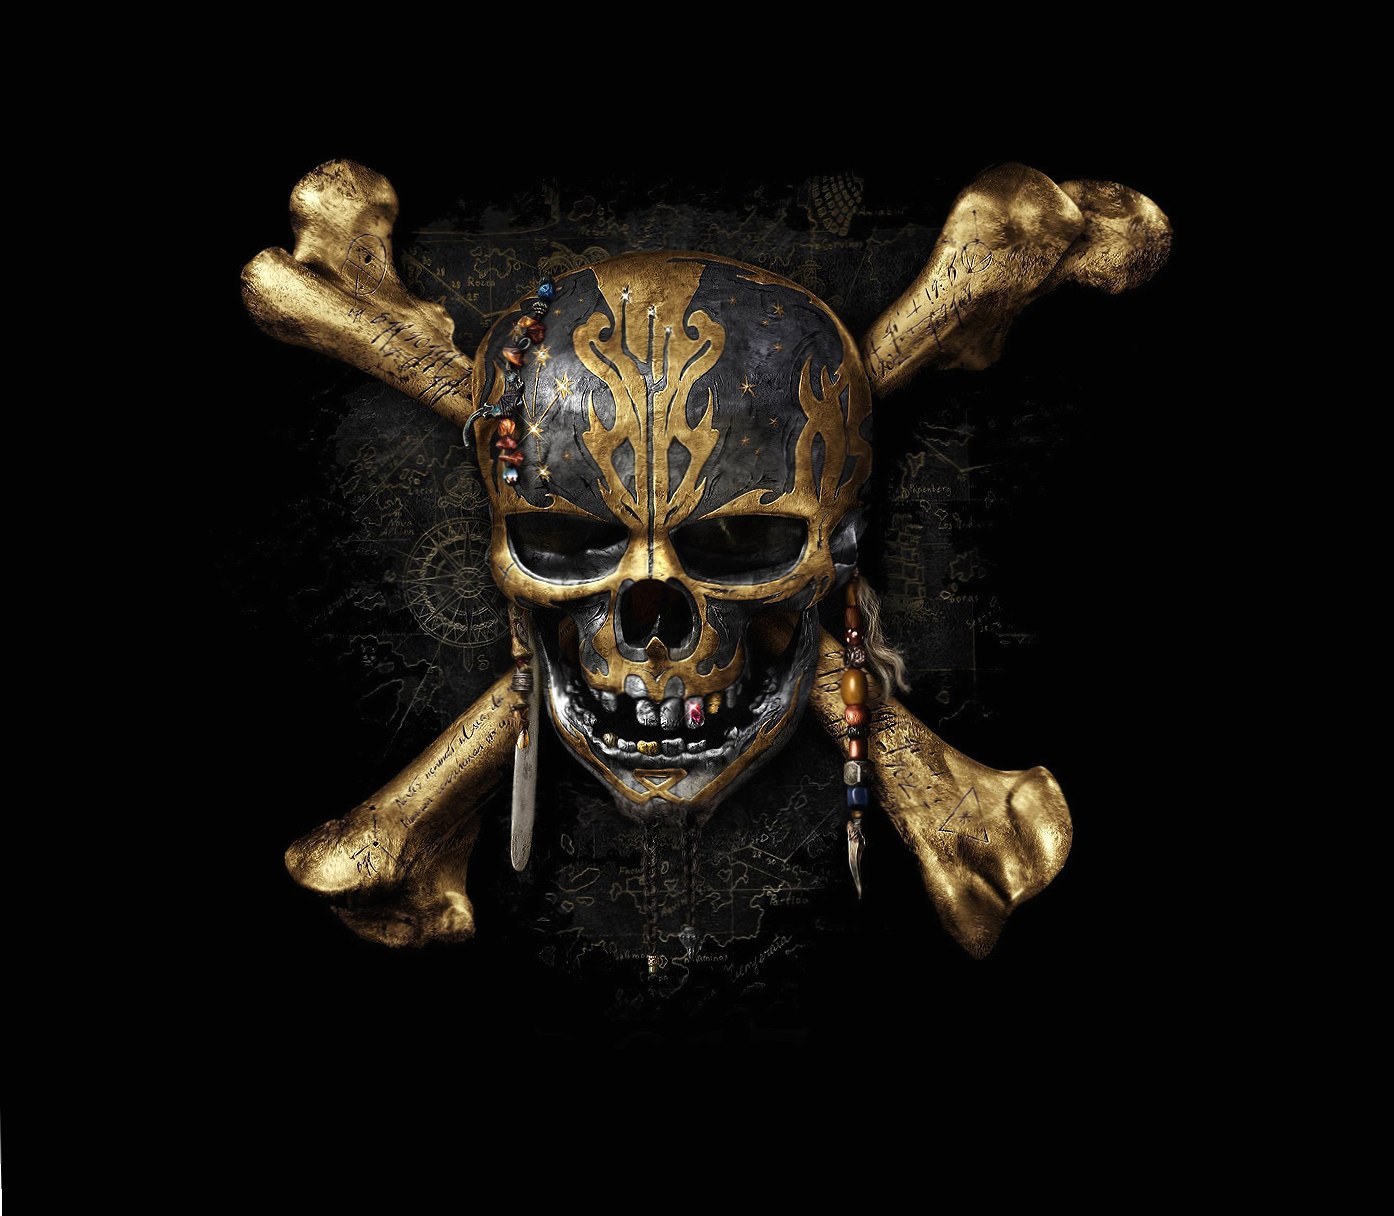 Caribbean Skull at 1024 x 1024 iPad size wallpapers HD quality